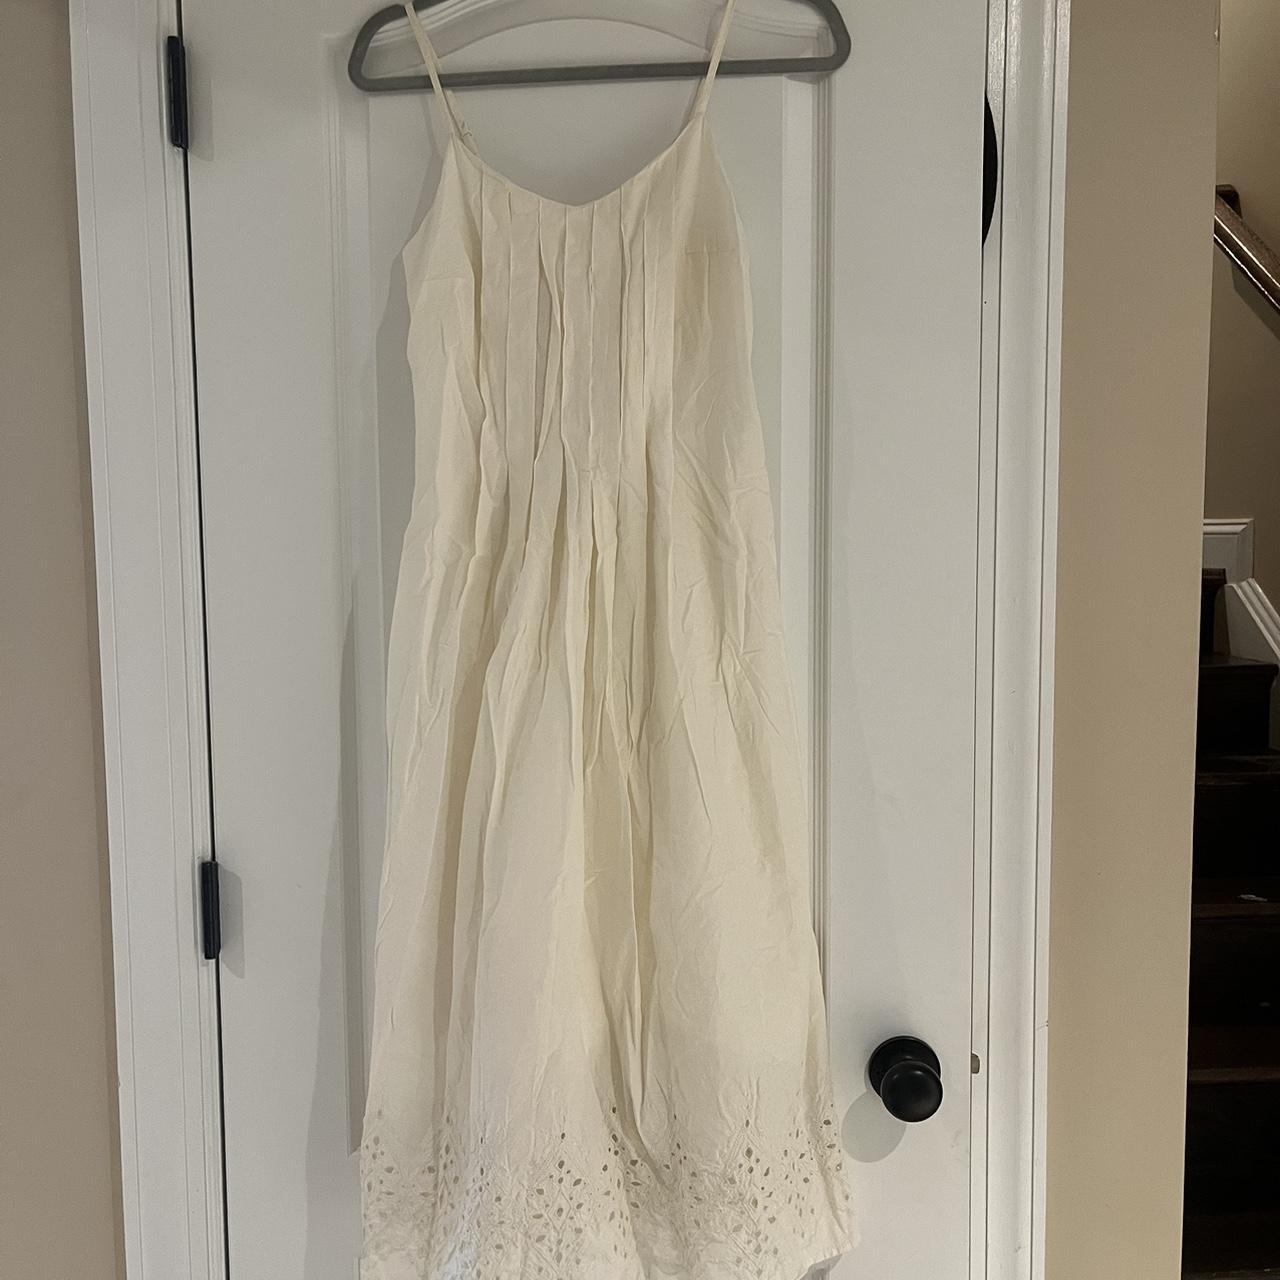 off white cotton slip style dress Never worn - Depop